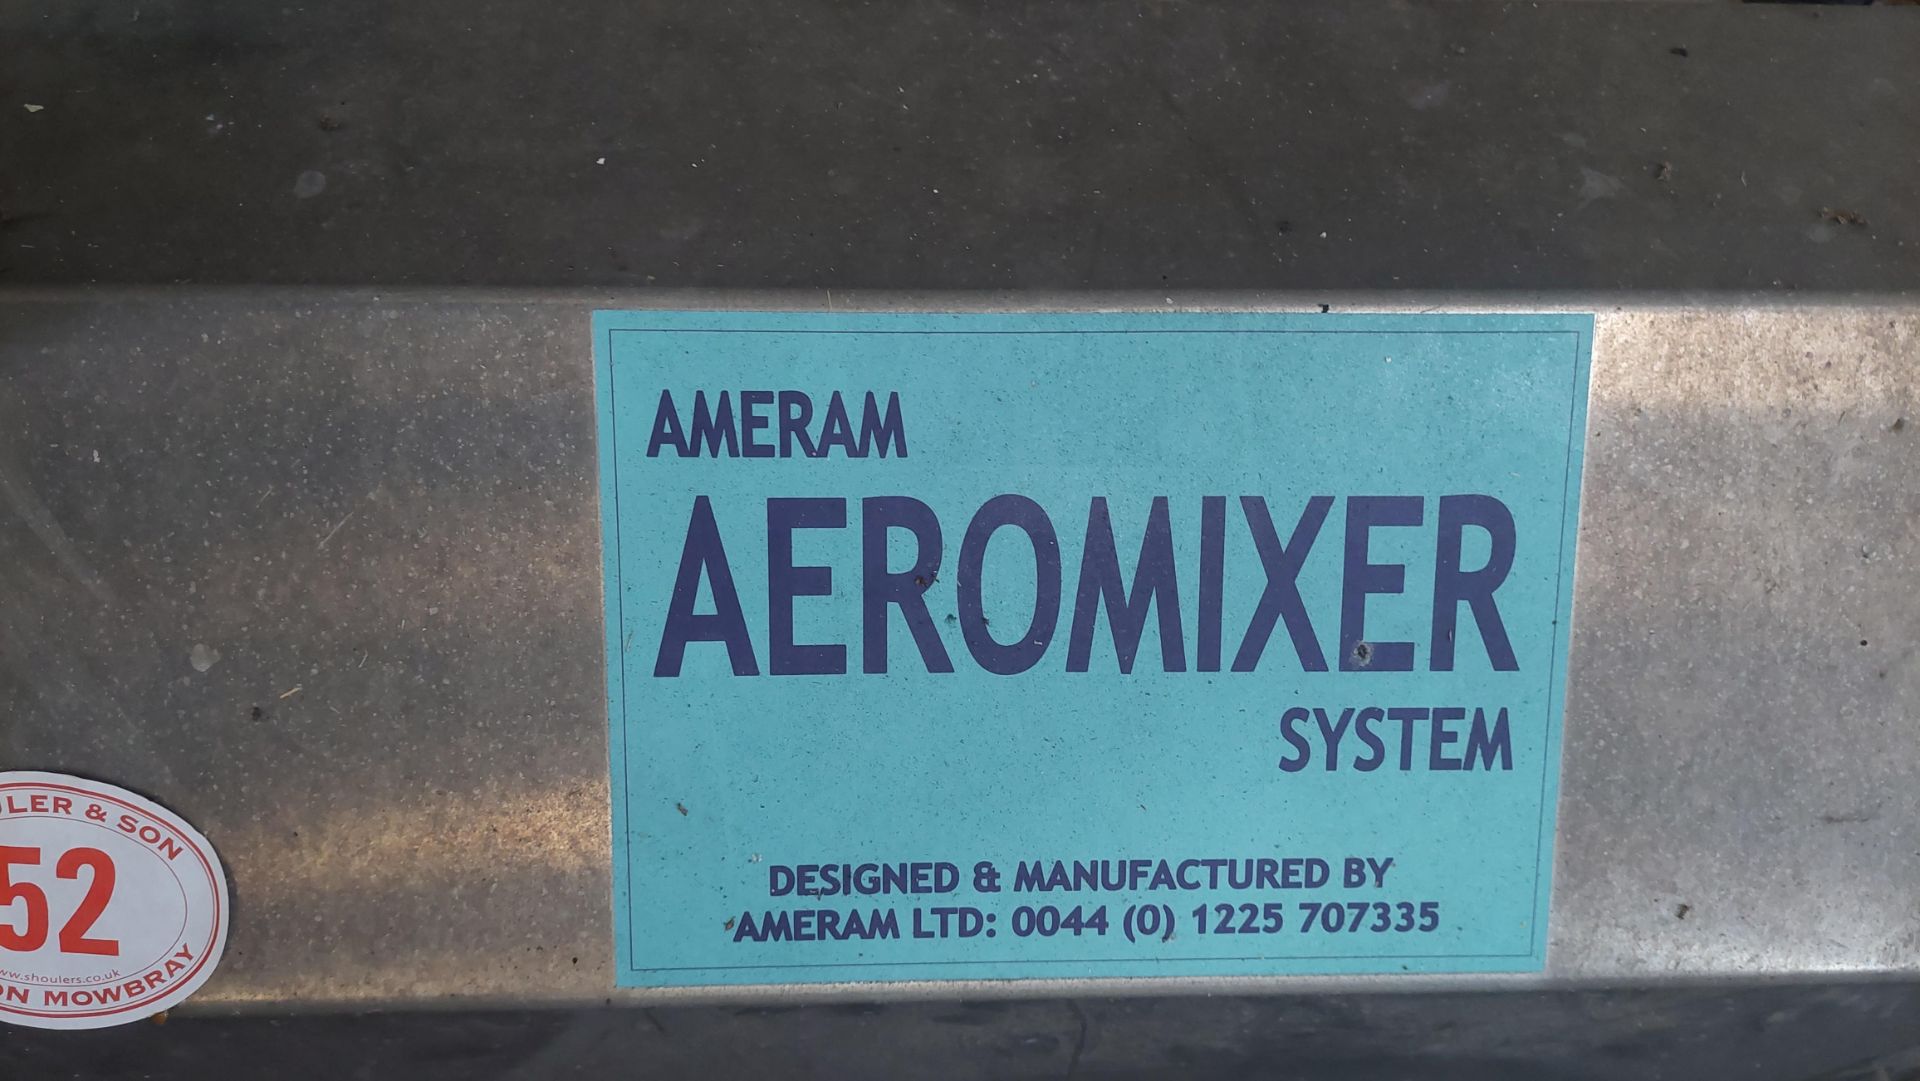 Ameram aeromixer system for slurry tank - Image 3 of 3